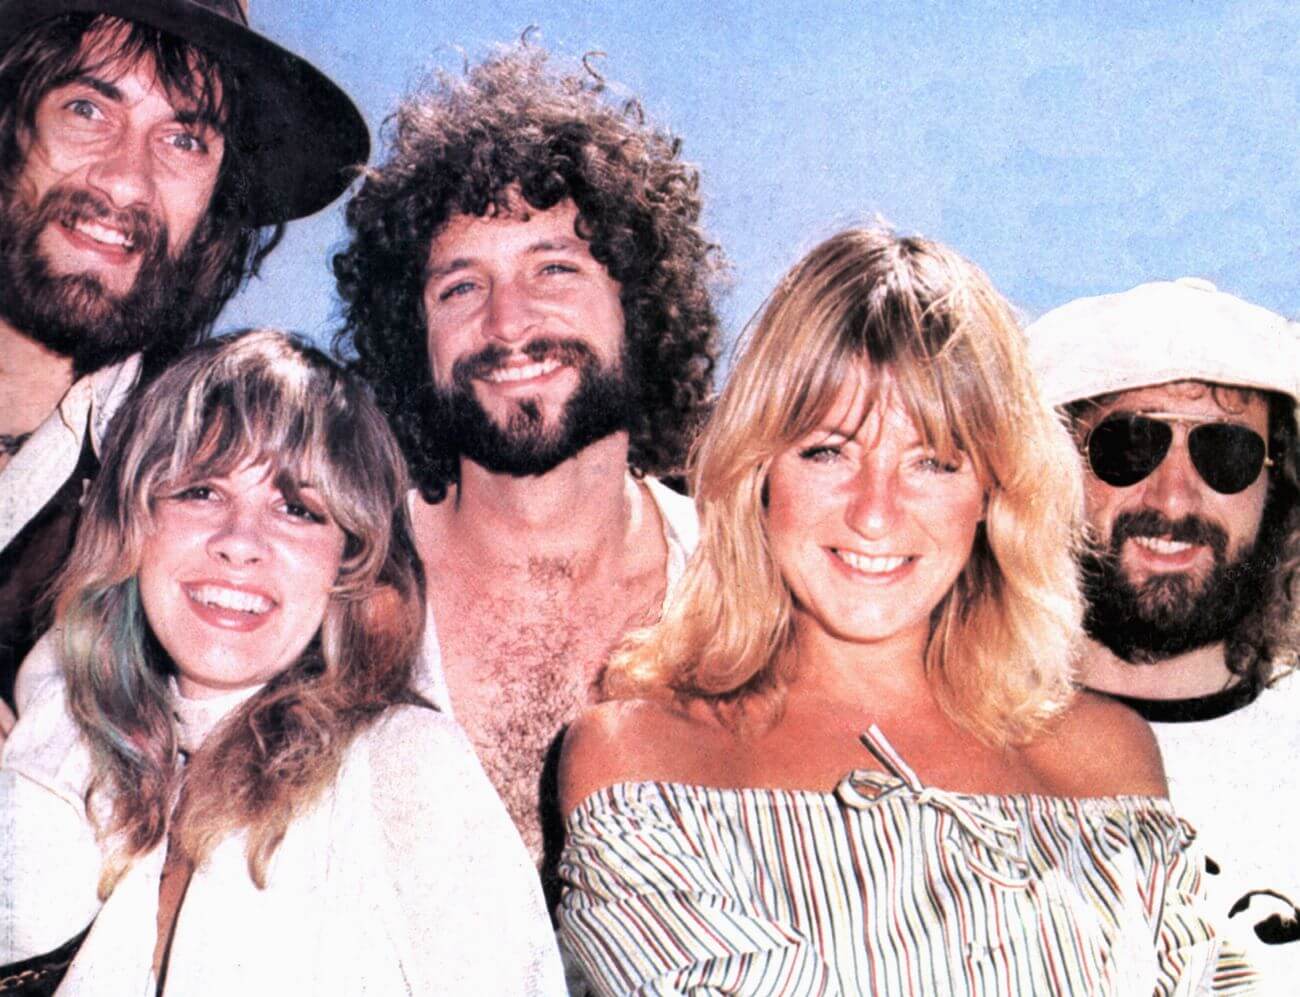 Mick Fleetwood, Stevie Nicks, Lindsey Buckingham, Christine McVie, and John McVie smile against a blue background.